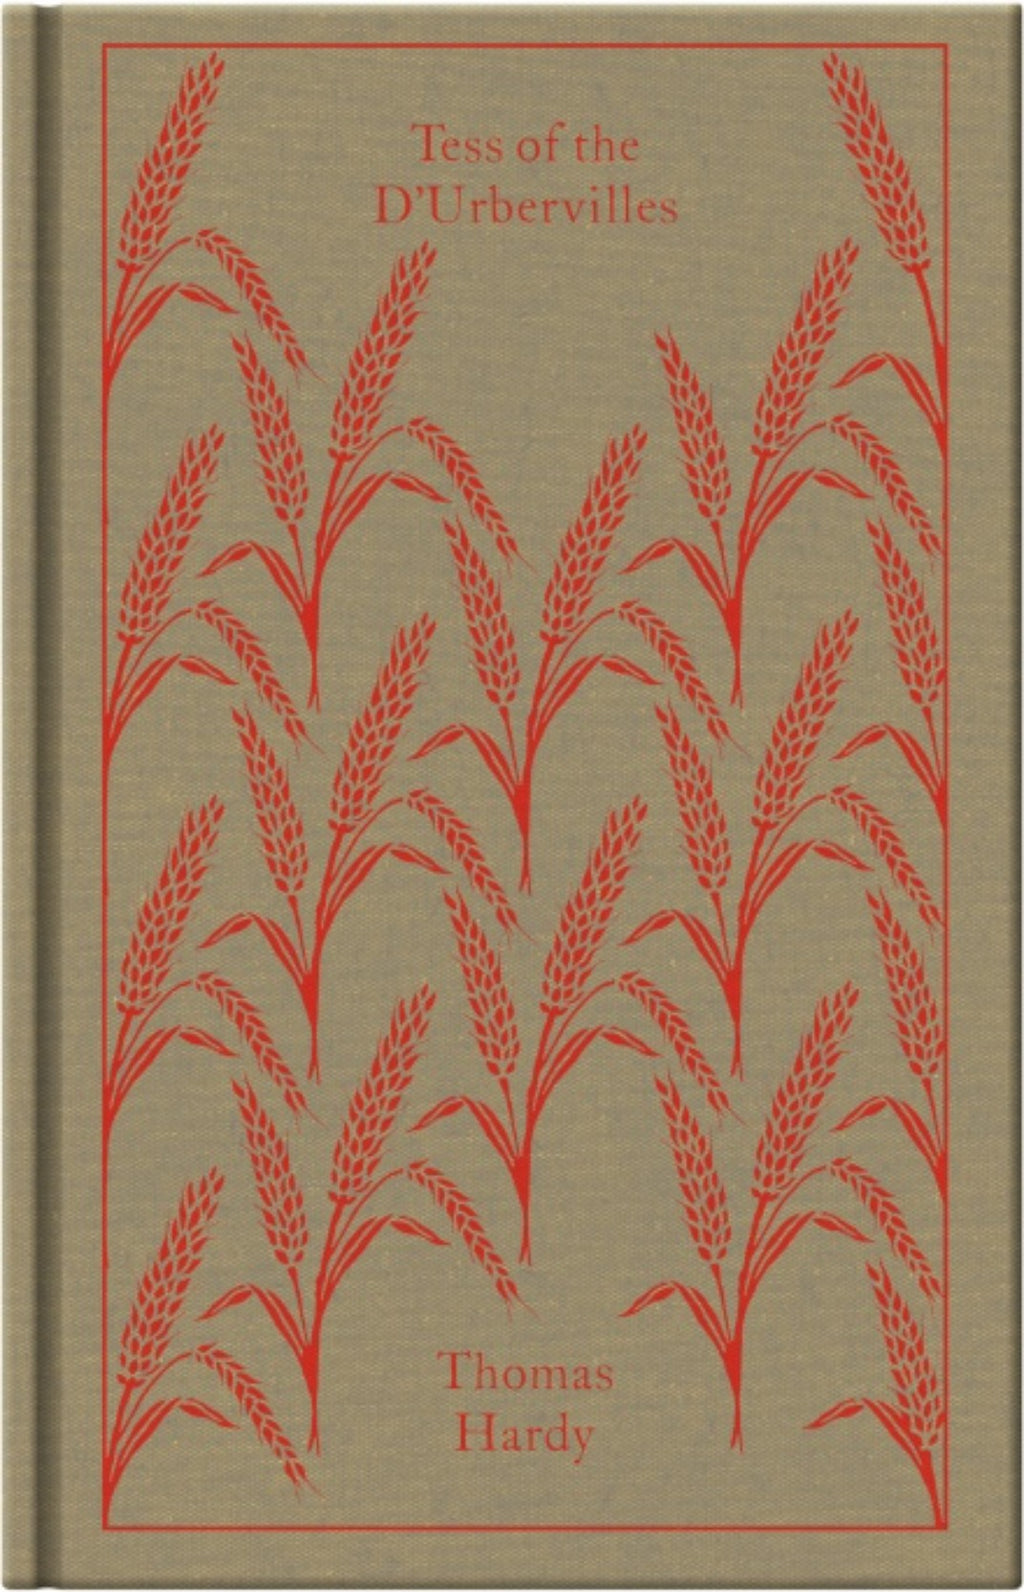 Tess of the D'Urbervilles - Penguin Clothbound Classics